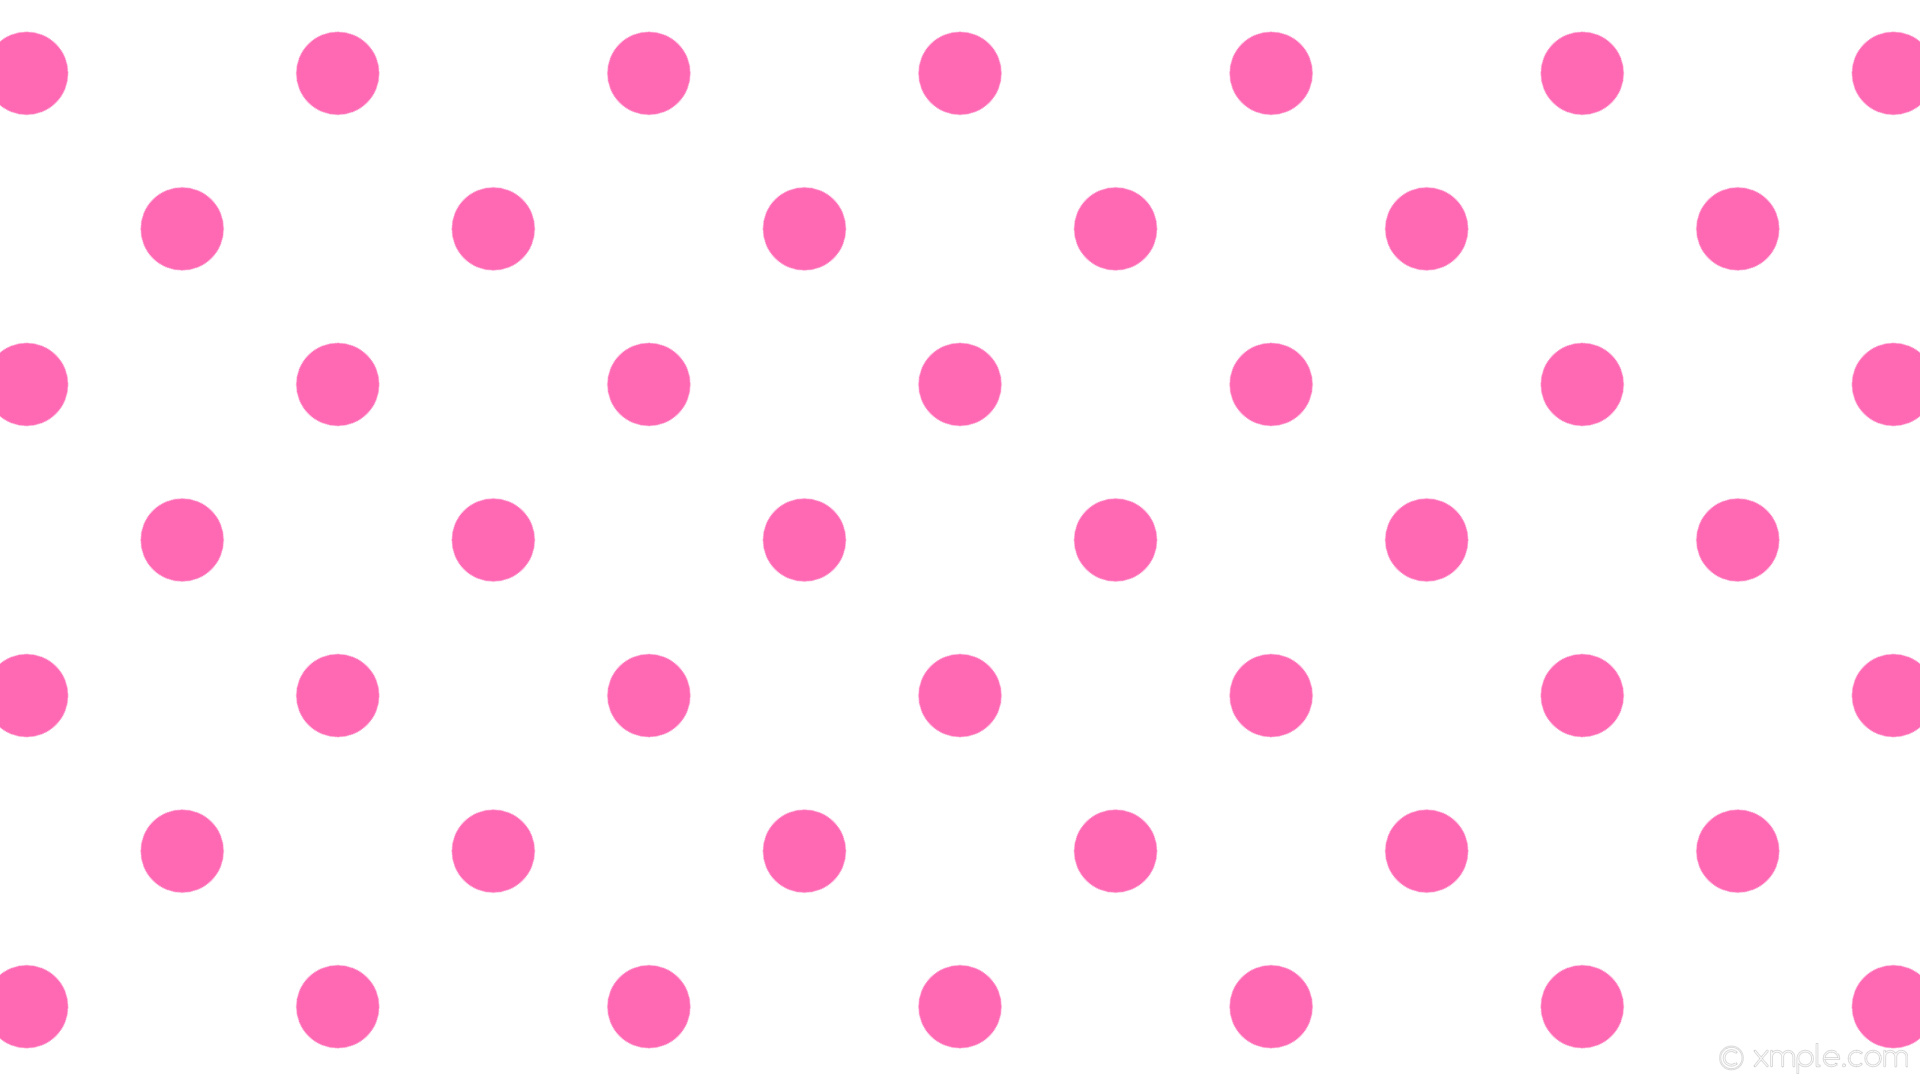 Polka Dot, Pink color scheme, Fun and playful, Clipart design, 1920x1080 Full HD Desktop